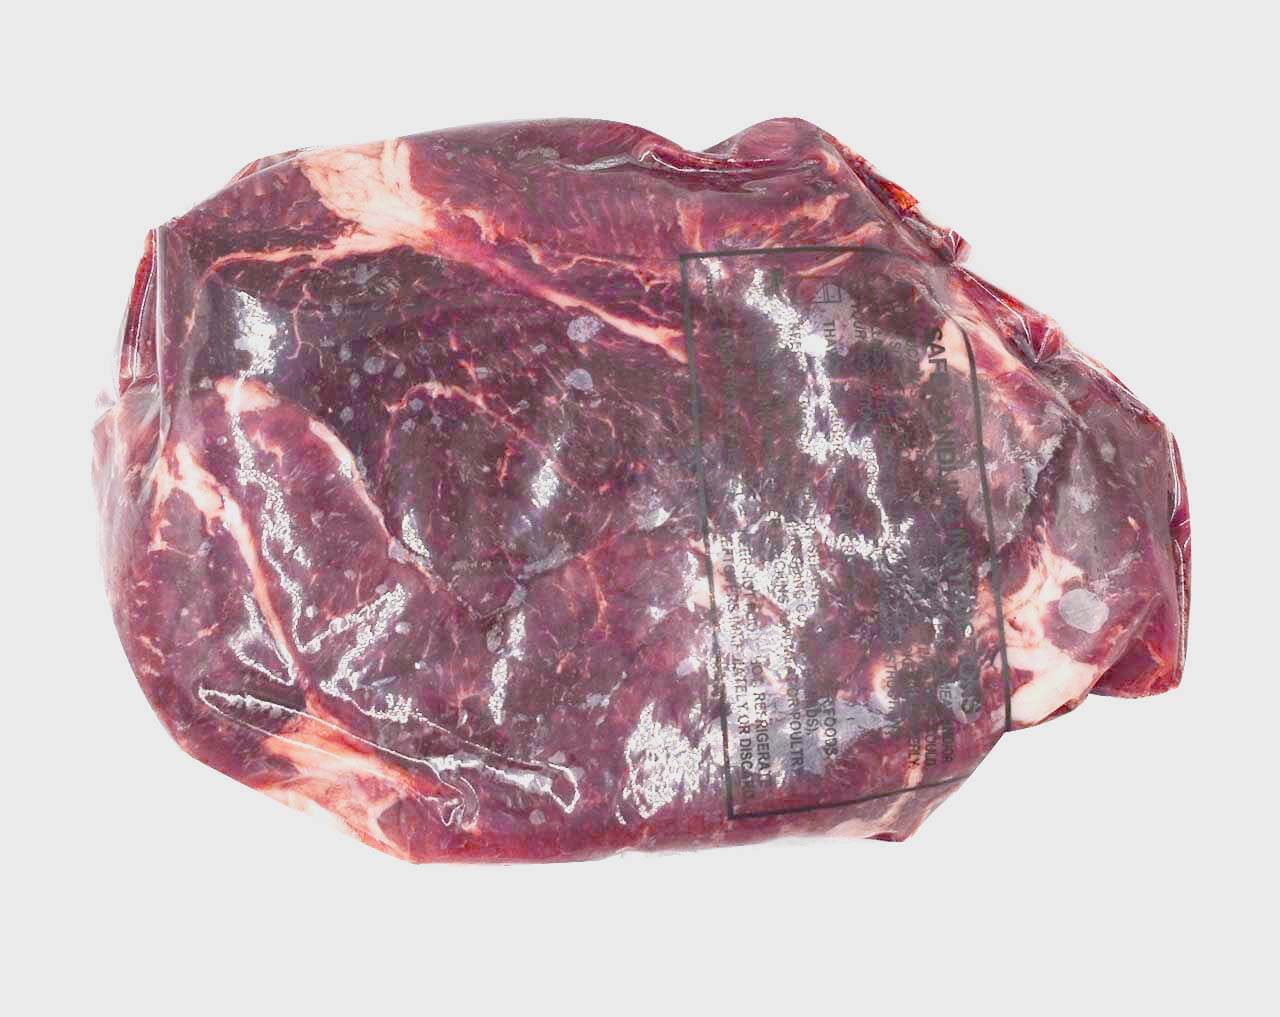 Beef Chuck Roast - Organic